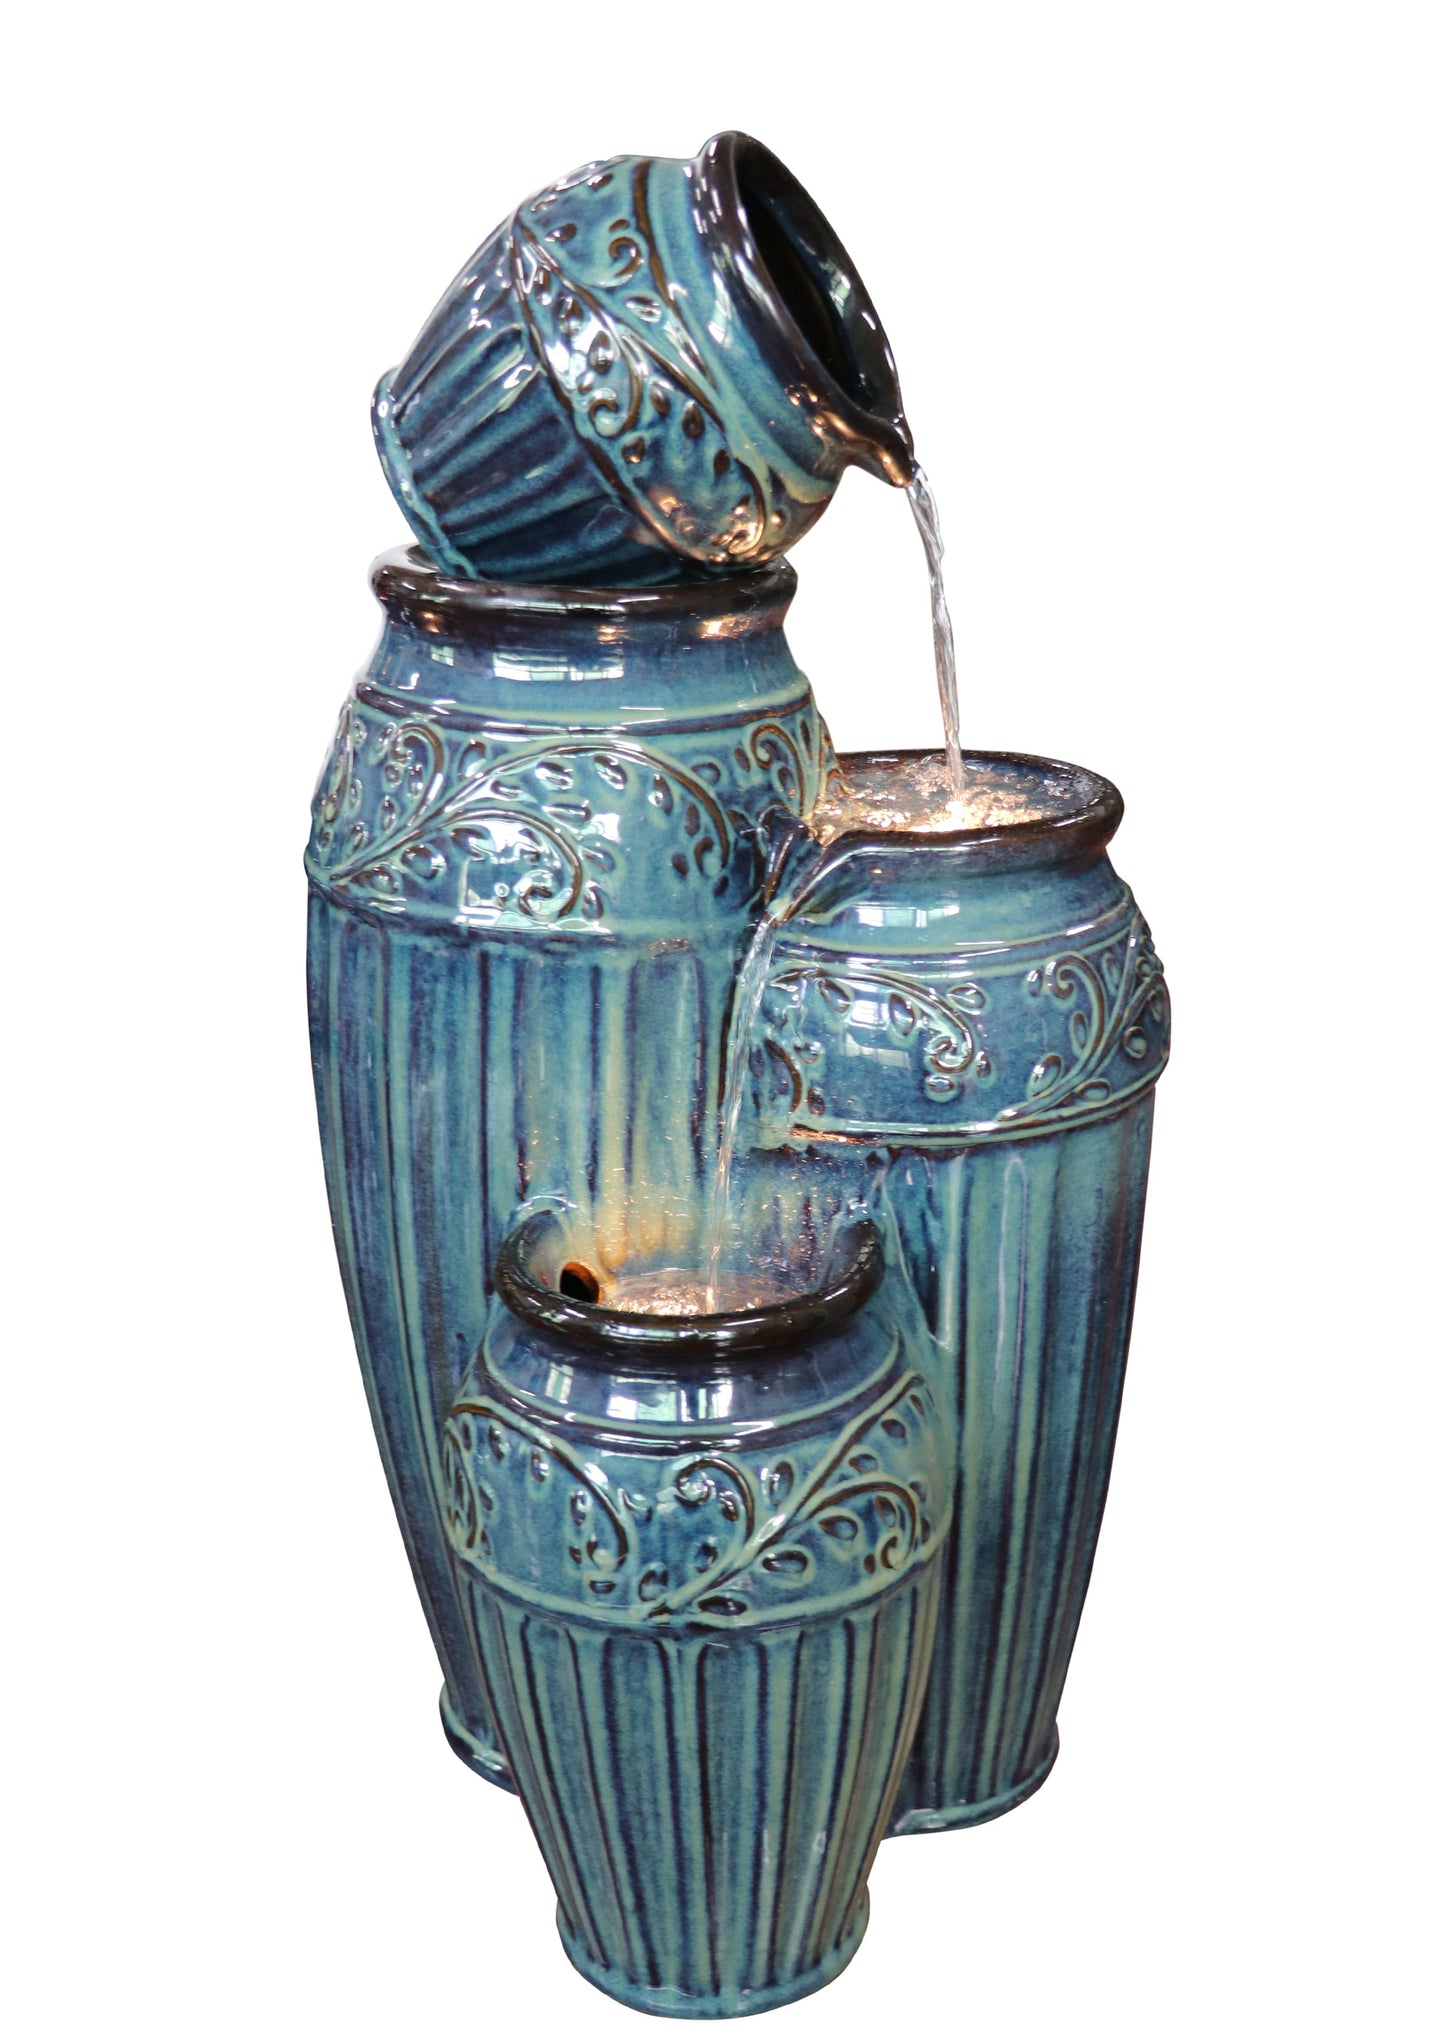 Rosaleda Glazed Ceramic Water Feature